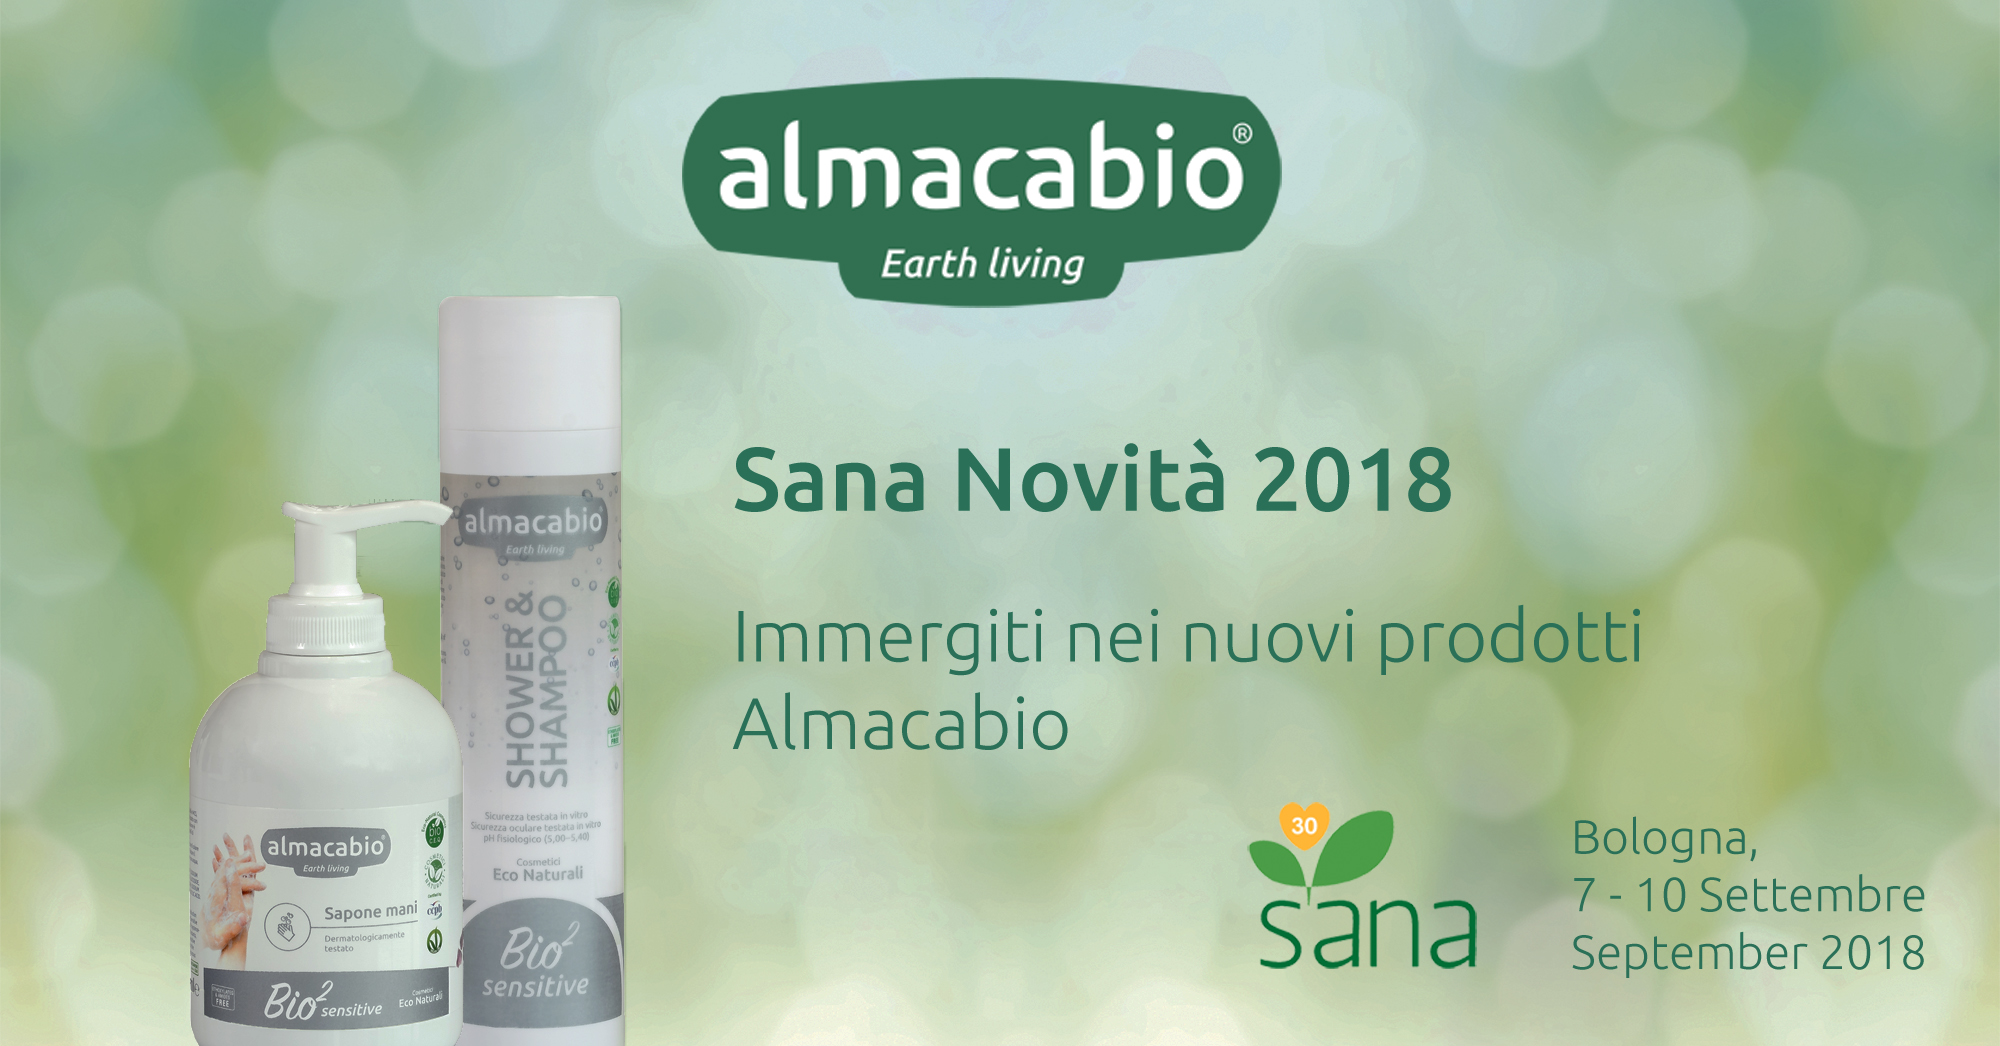 Almacabio presenta i nuovi prodotti Sana 2018